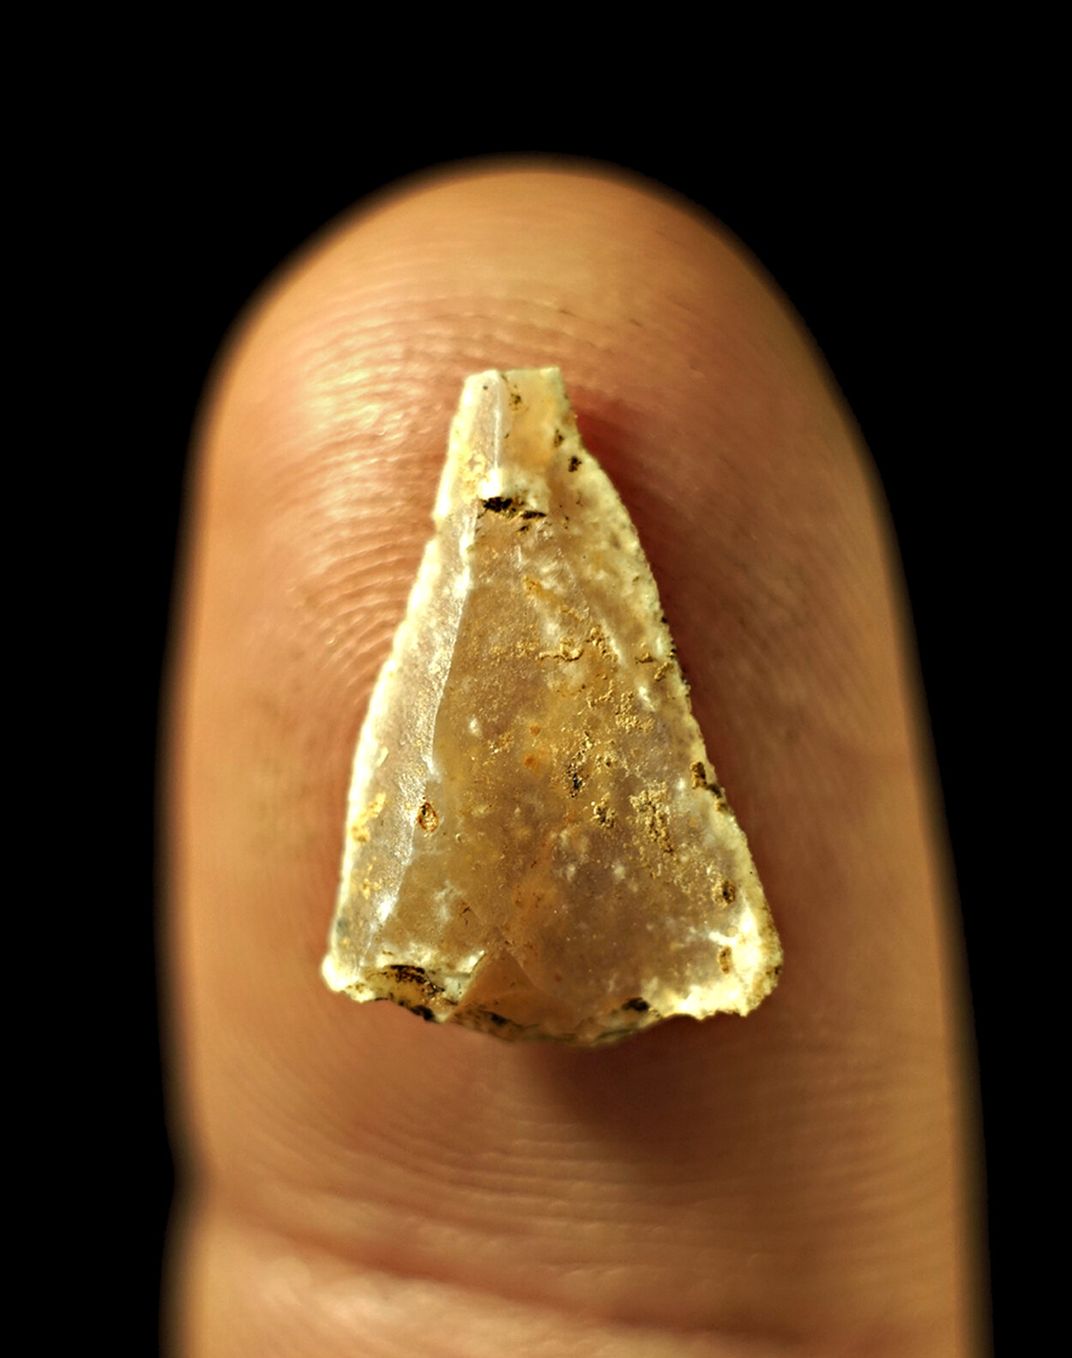 Tiny triangular piece of stone on fingertip